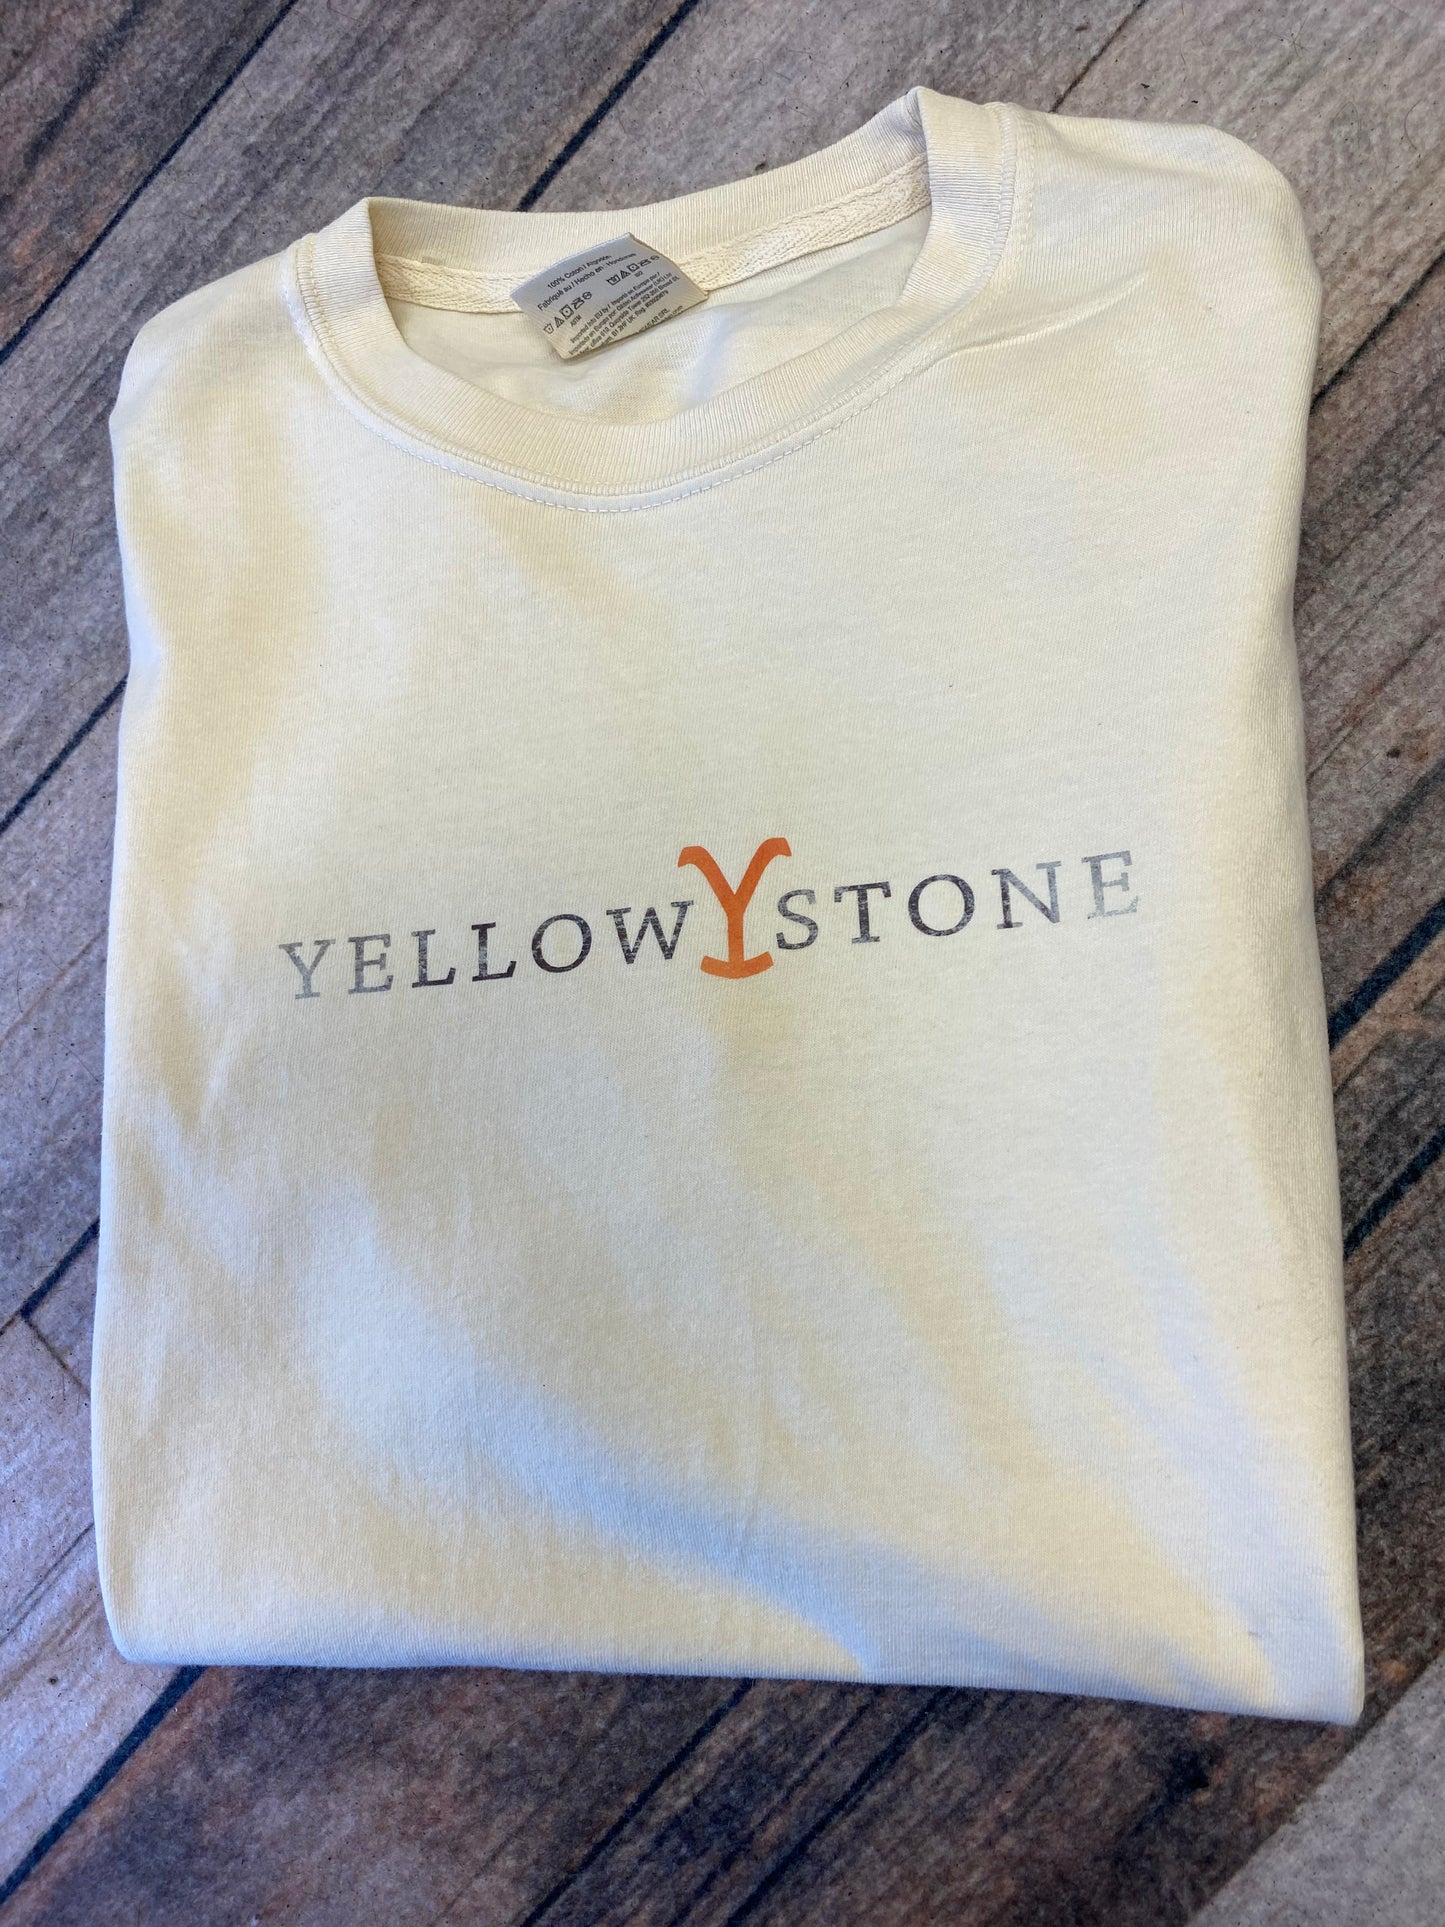 Yellowstone Longsleeve Tee